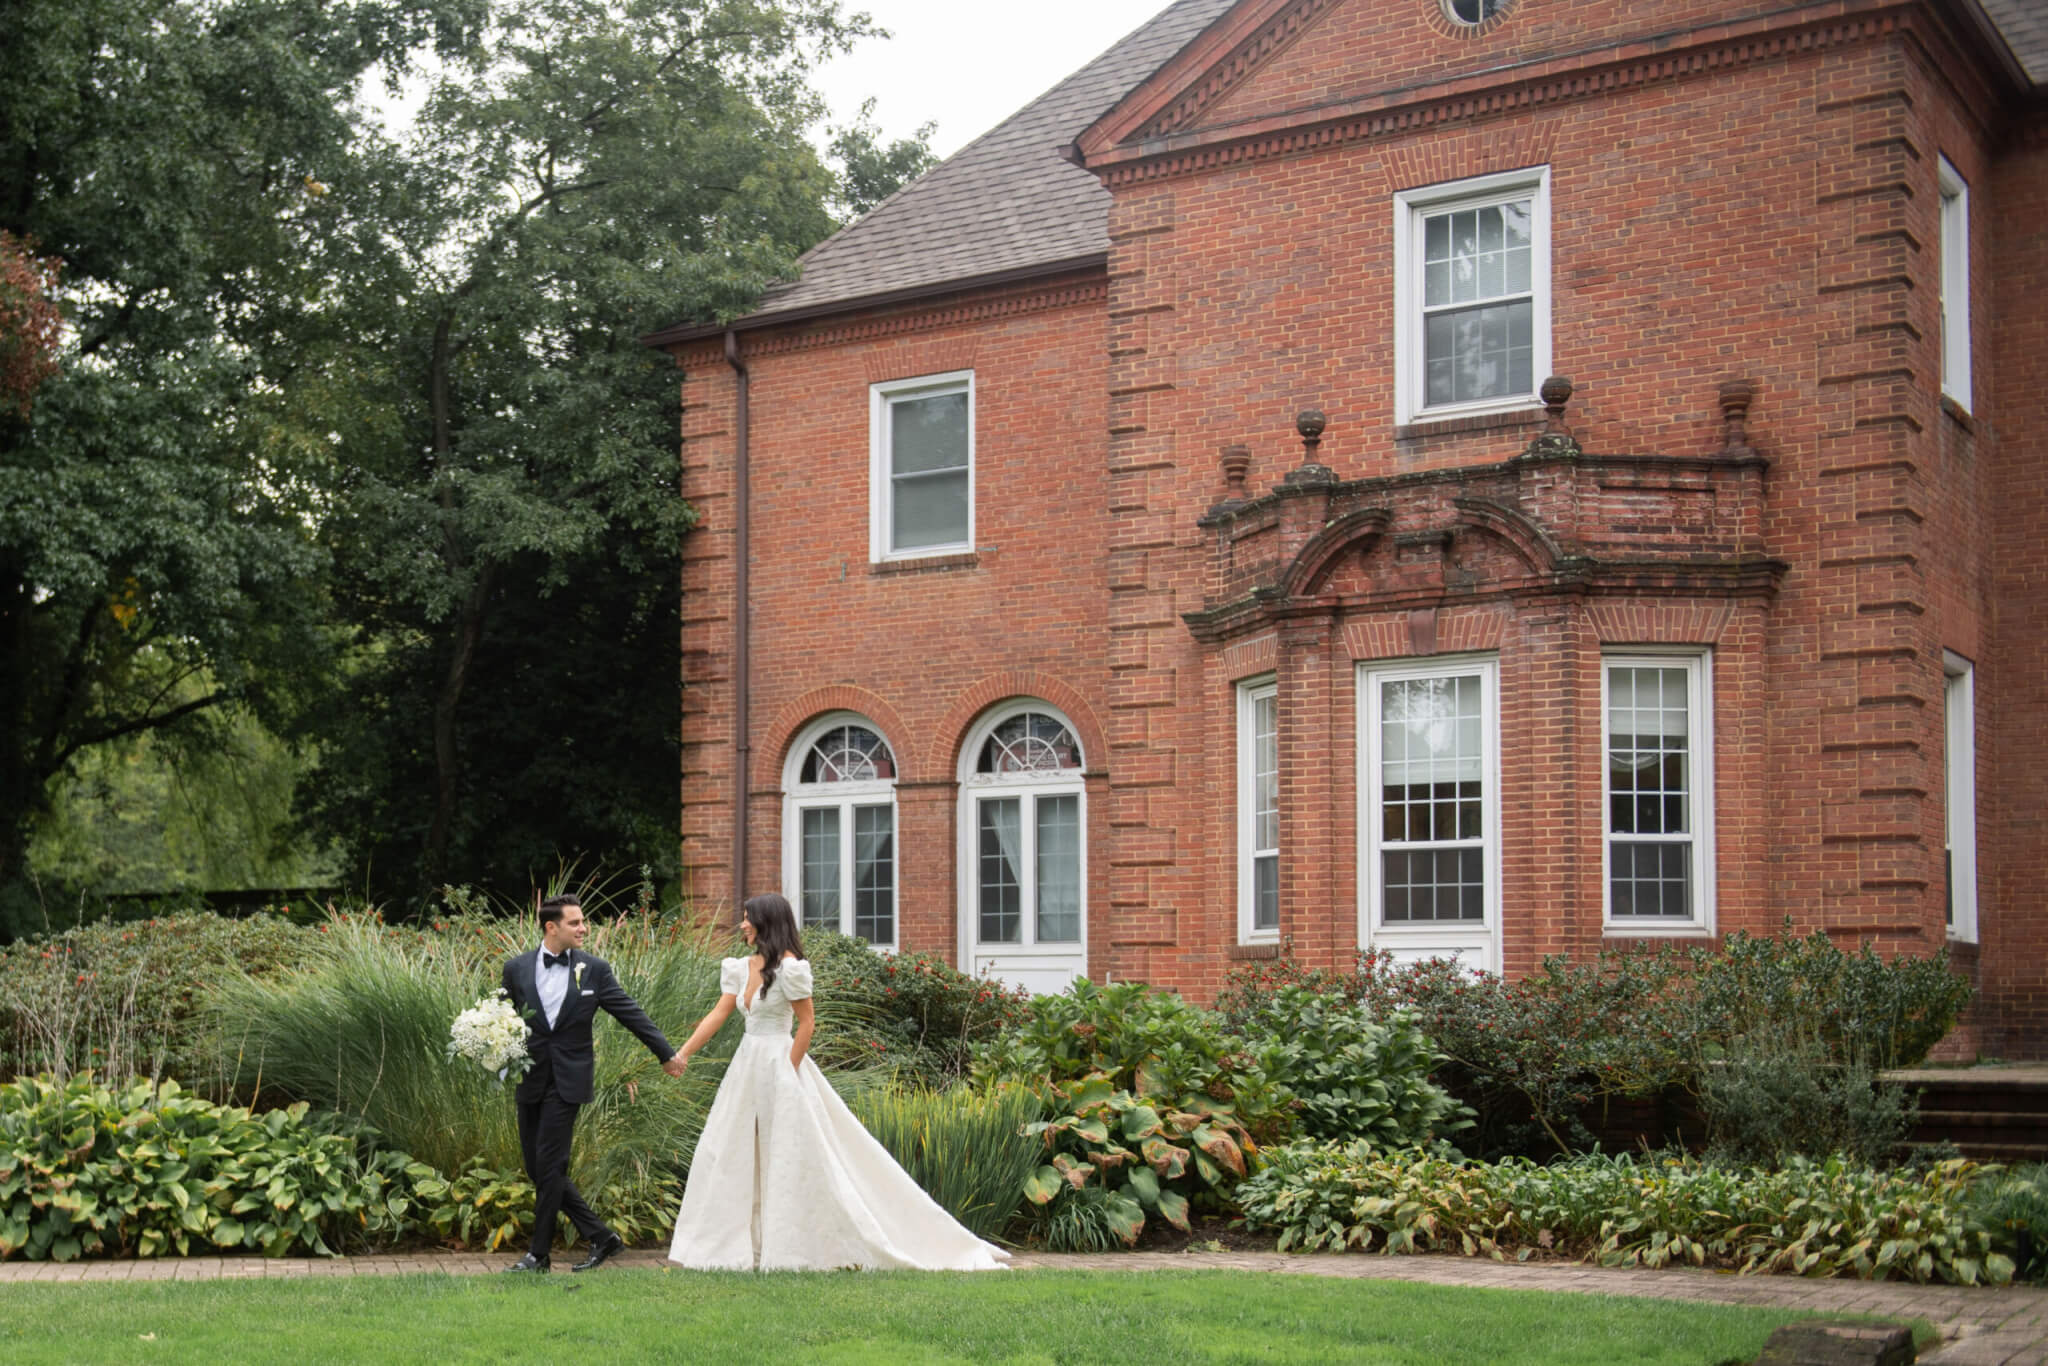 Enjoy Premier Long Island Wedding Venue Pine Hollow Club – All to Yourself